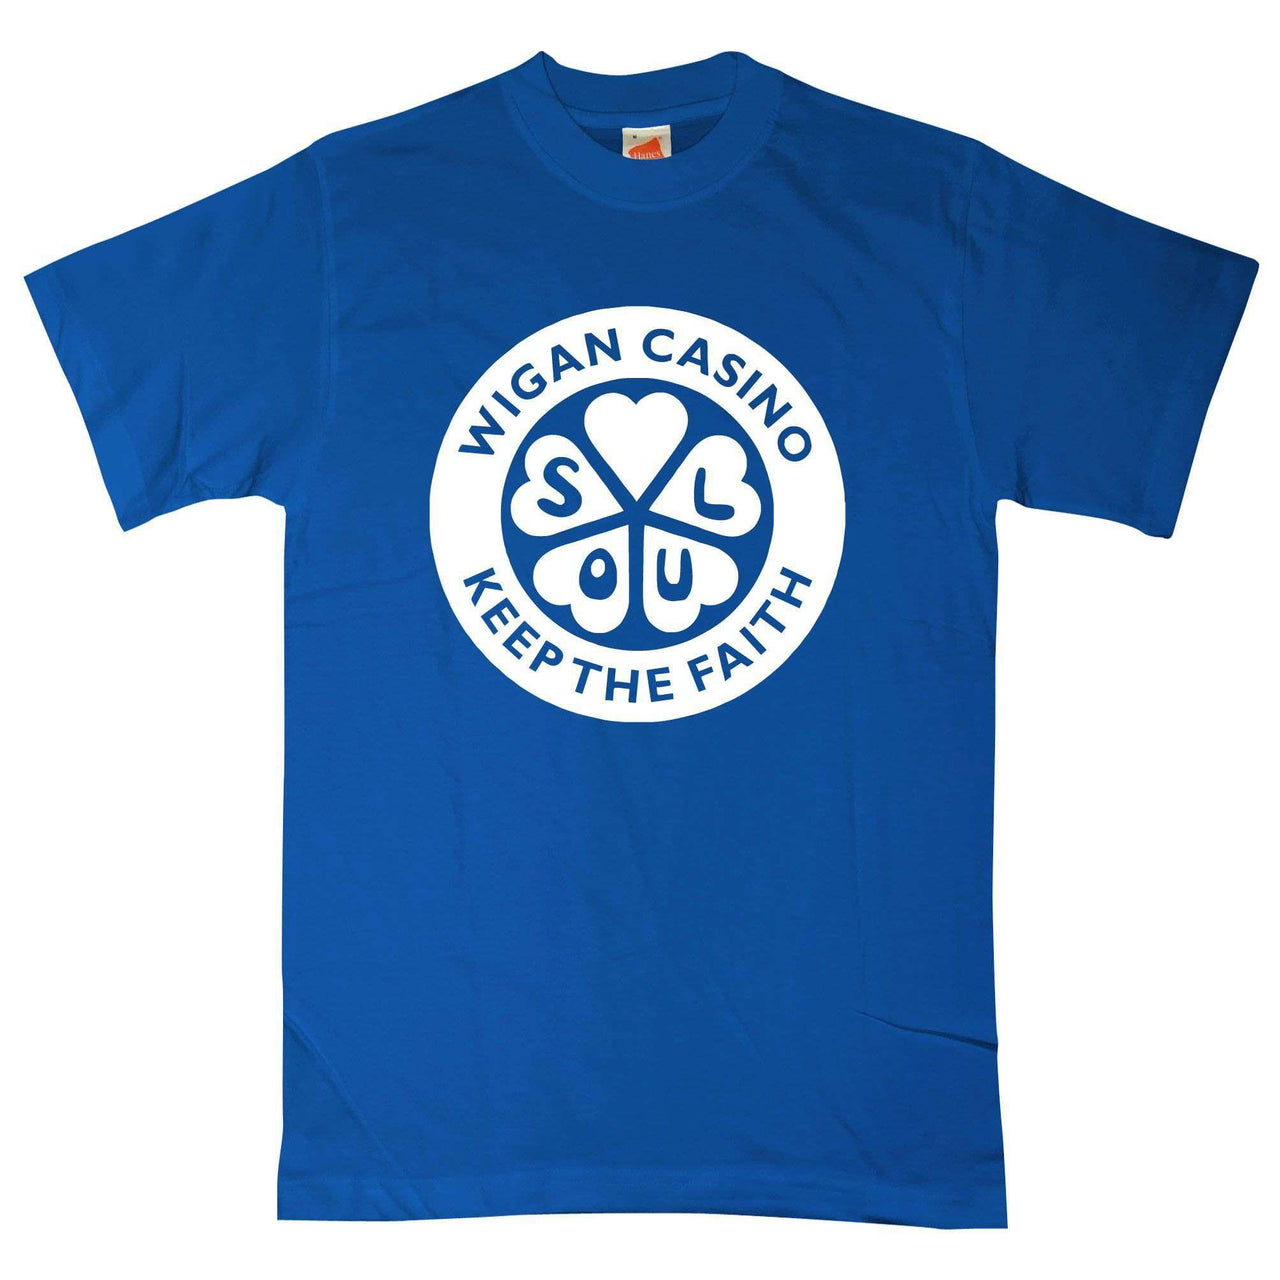 Northern Soul Wigan Casino Mens Graphic T-Shirt 8Ball